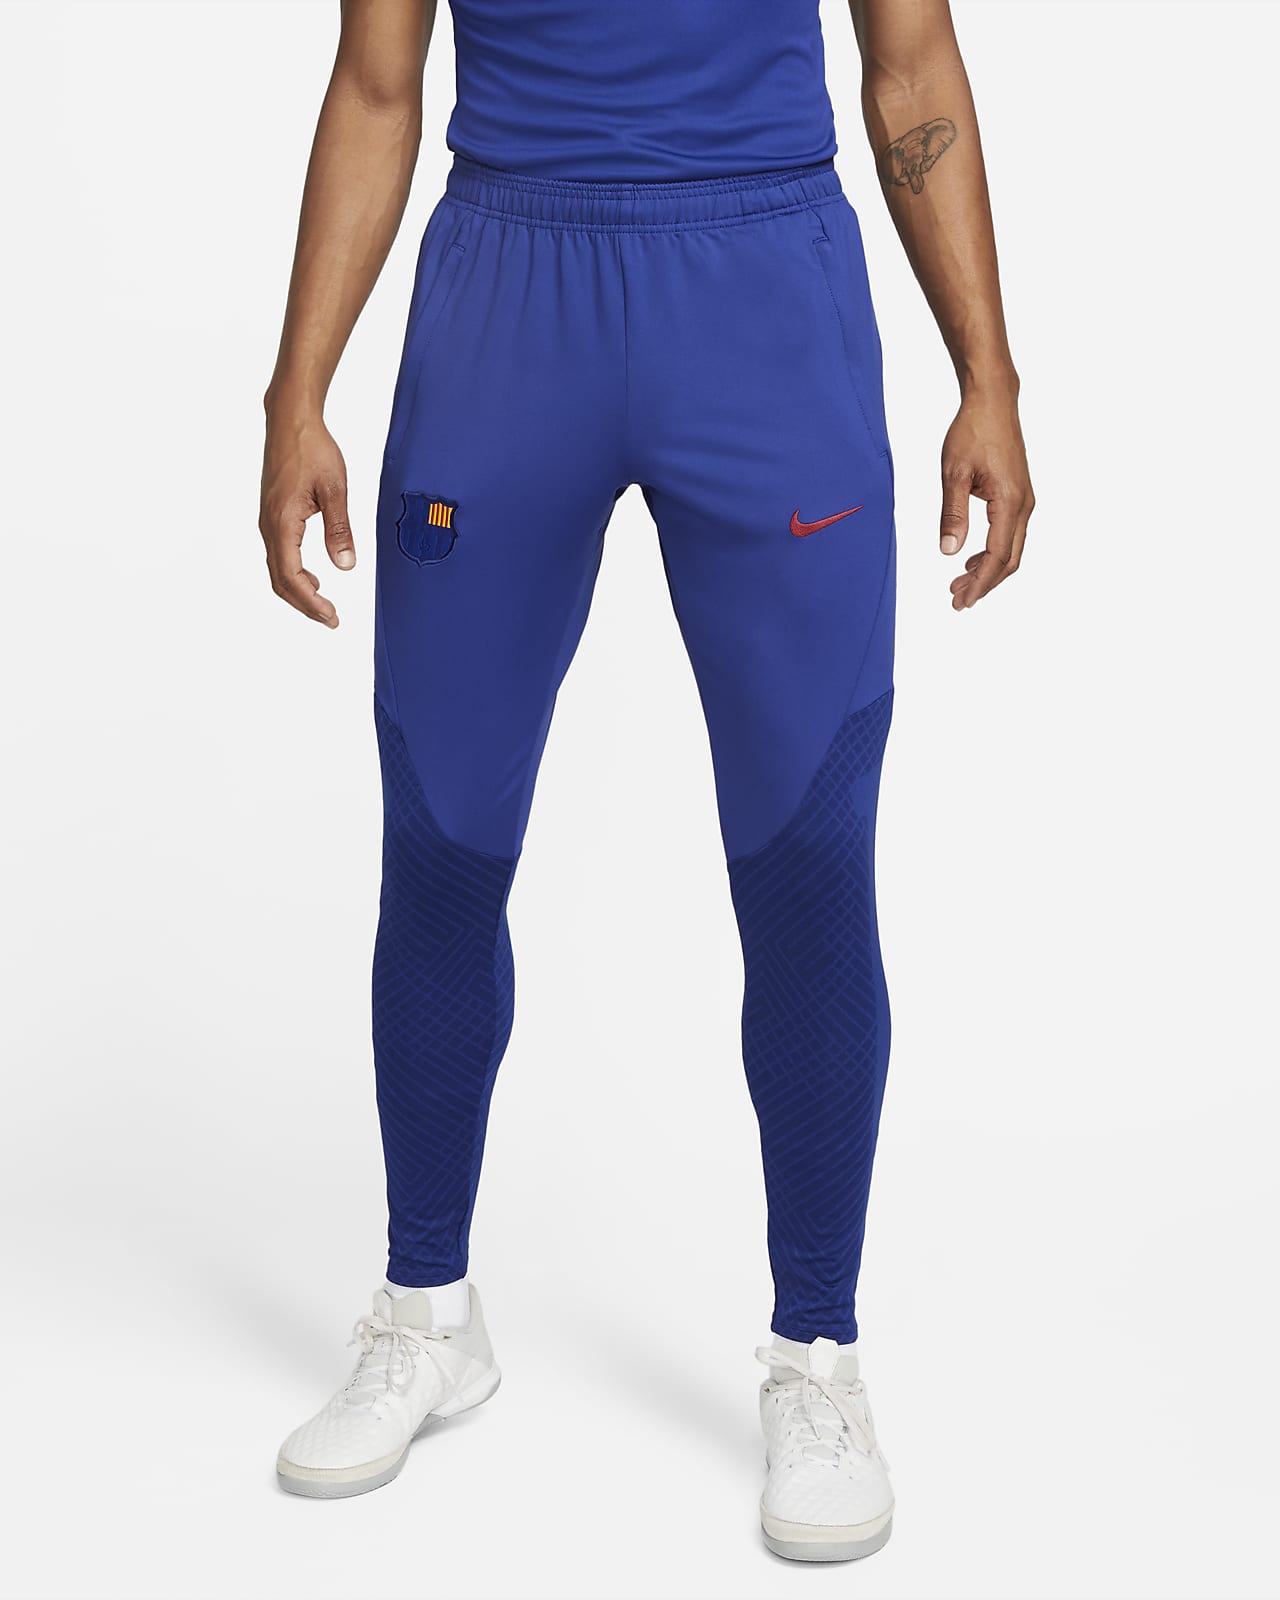 Barcelona Men's Nike Dri-FIT Football Pants. Nike LU